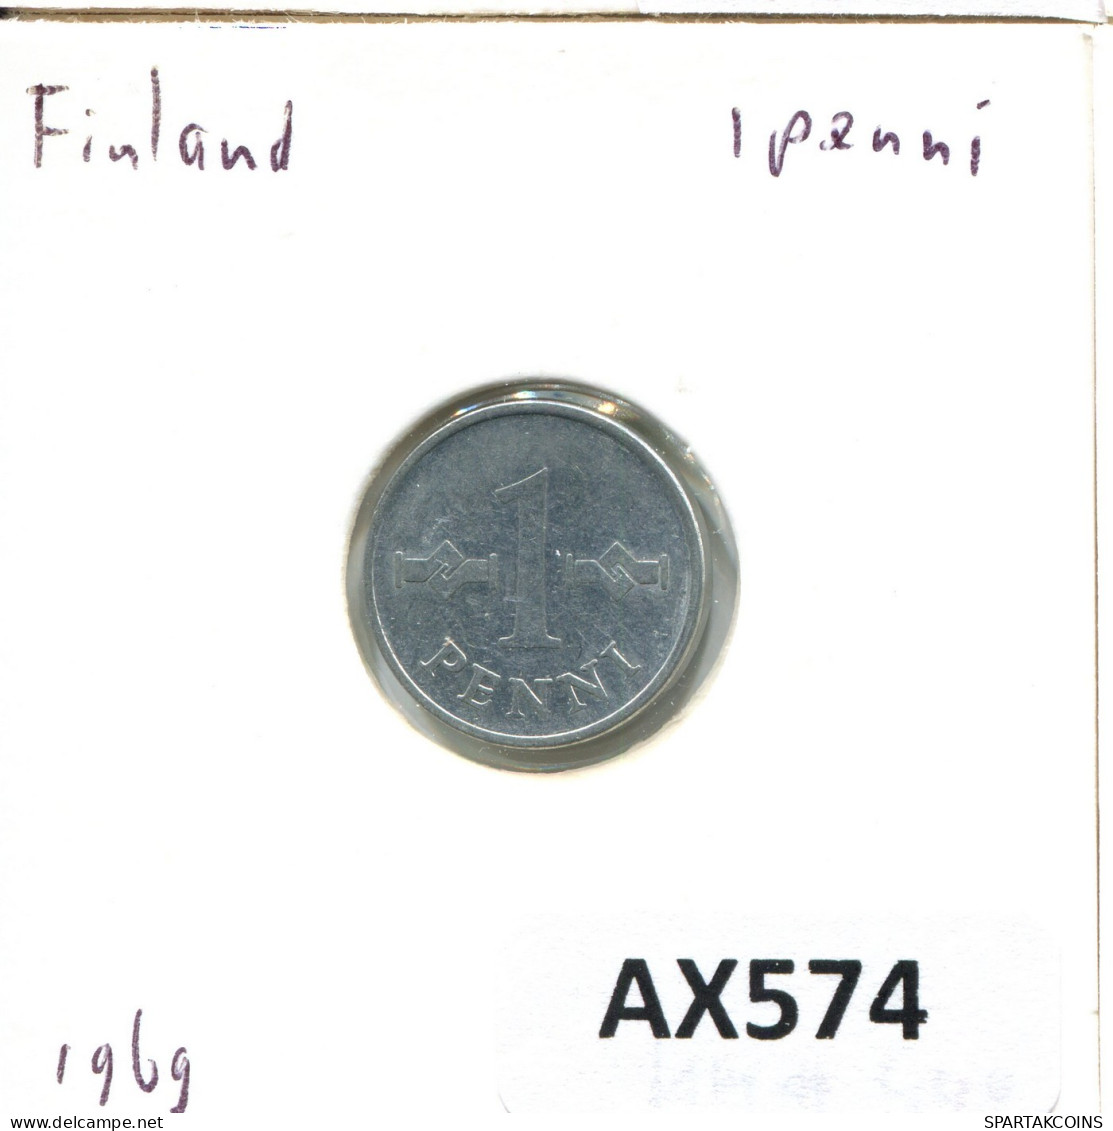 1 PENNY 1969 FINNLAND FINLAND Münze #AX574.D.A - Finlande